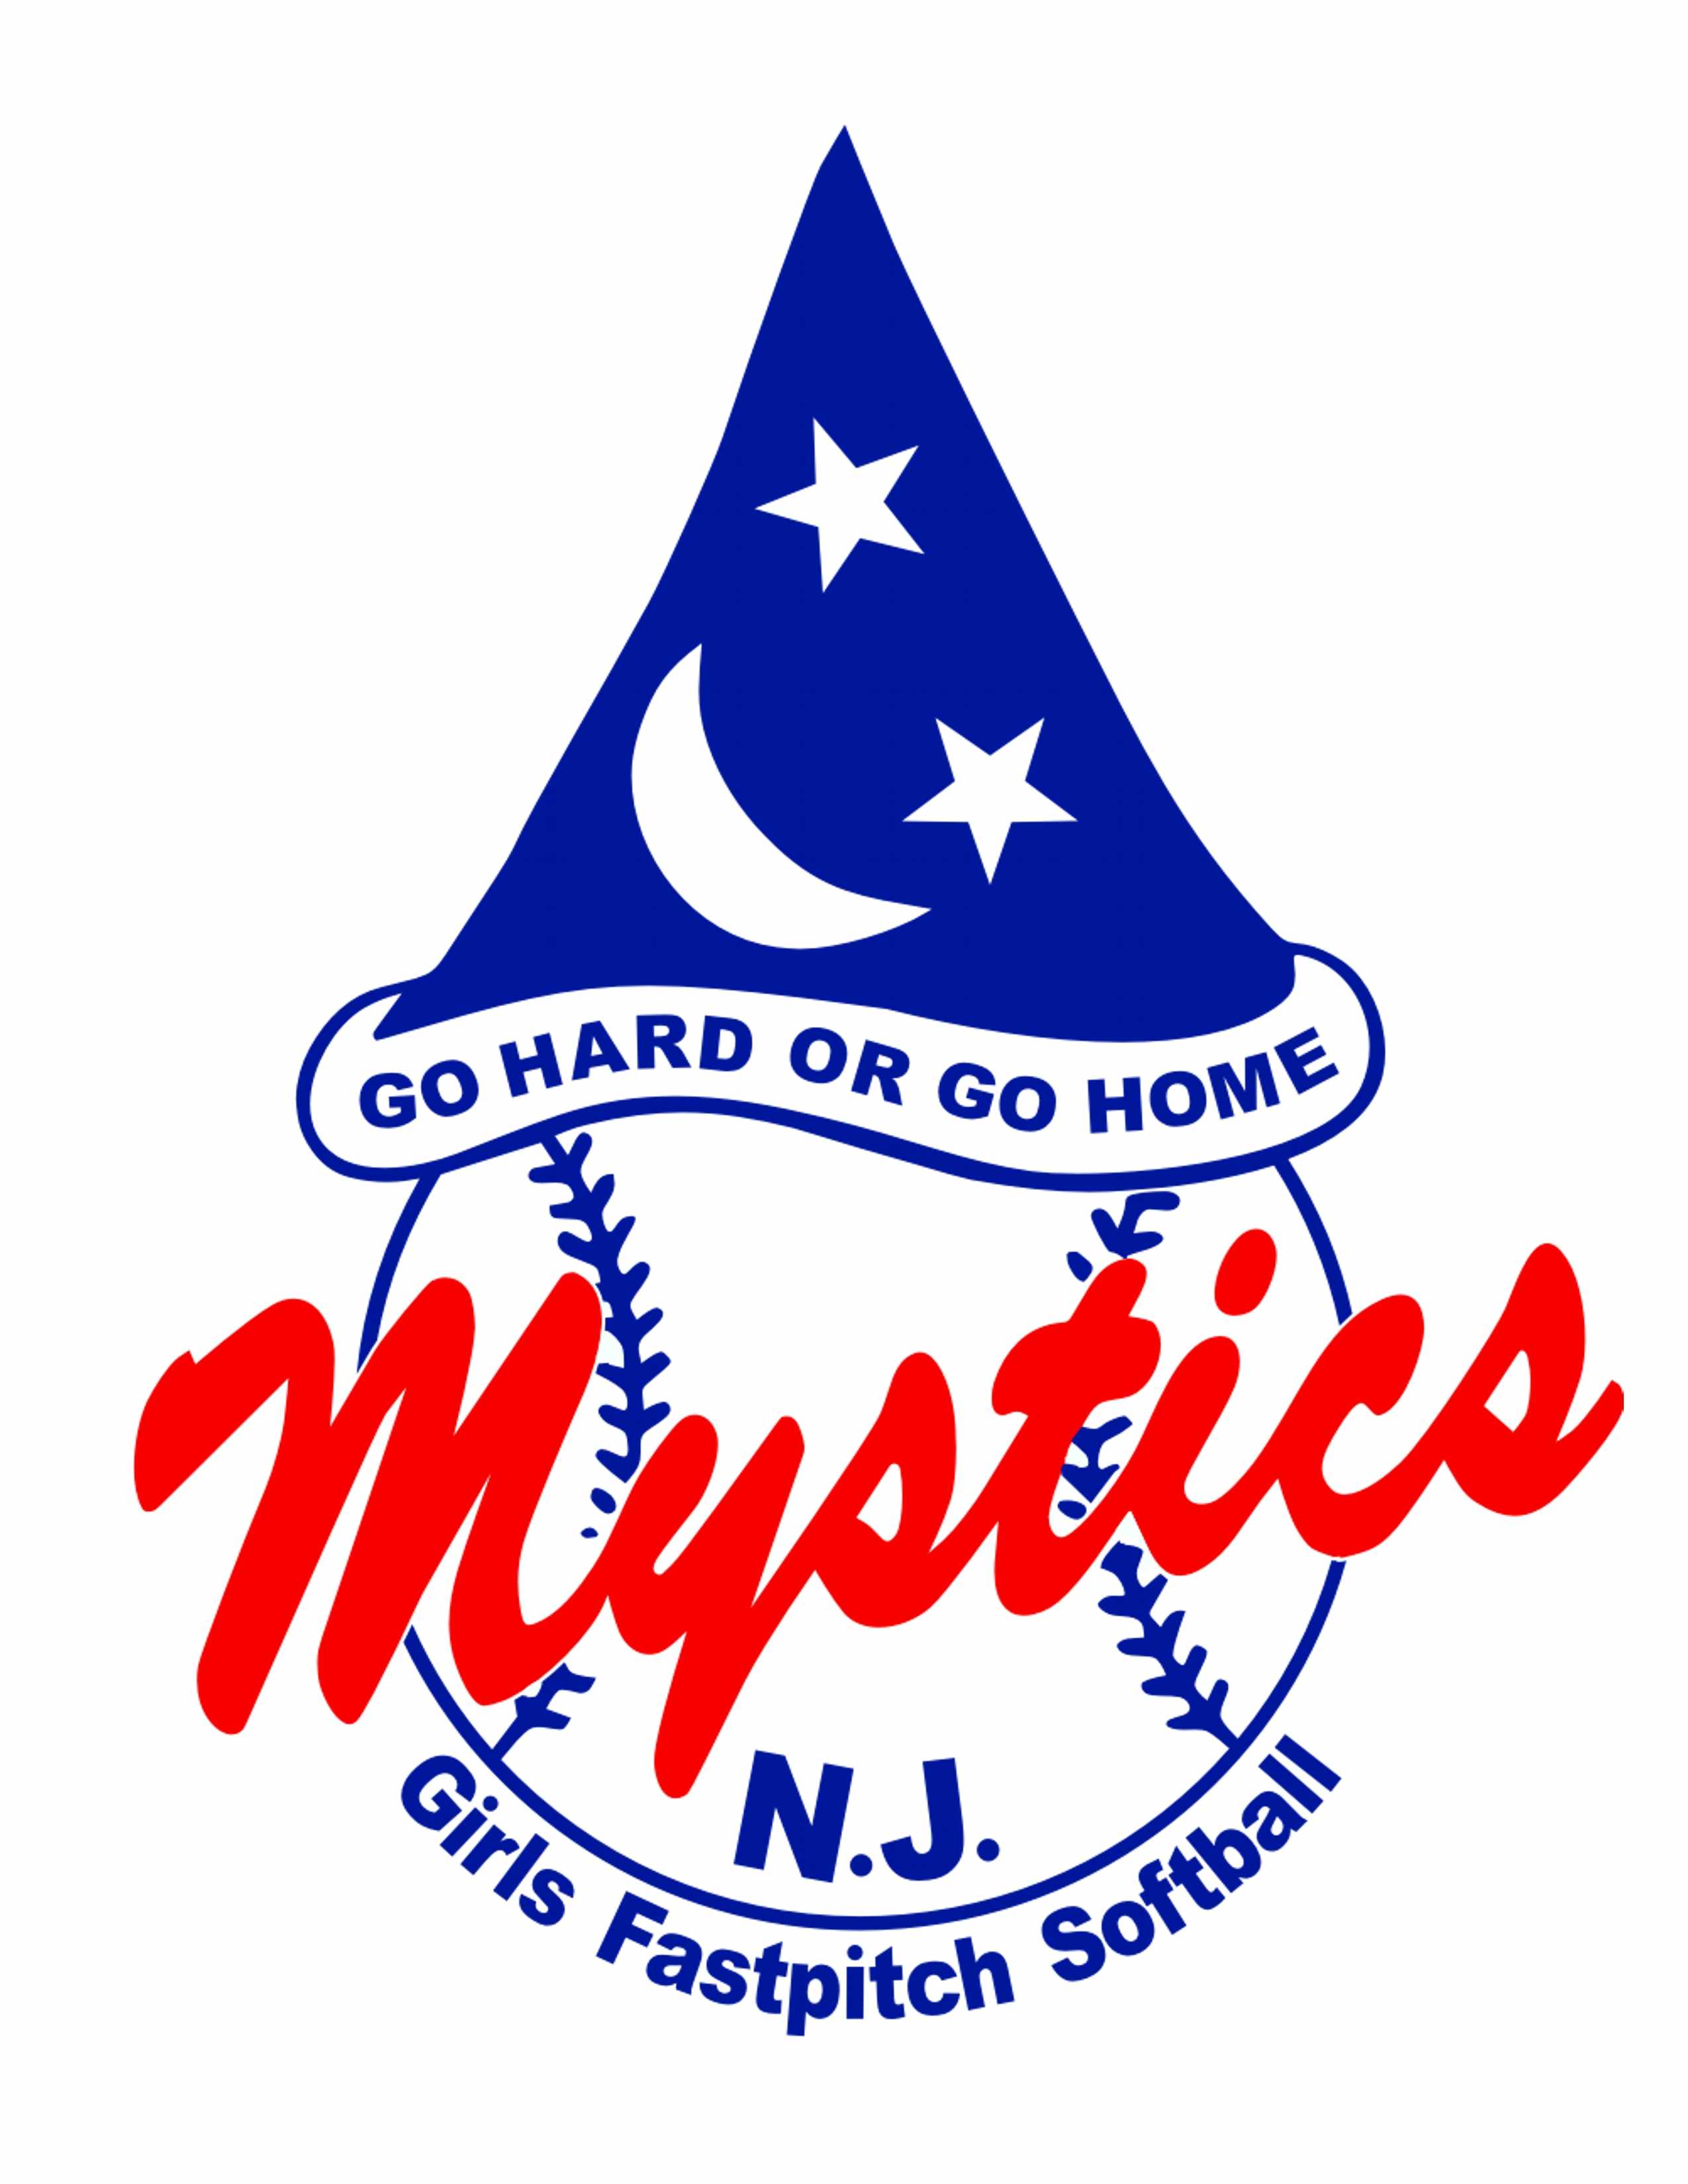 Mystics Logo